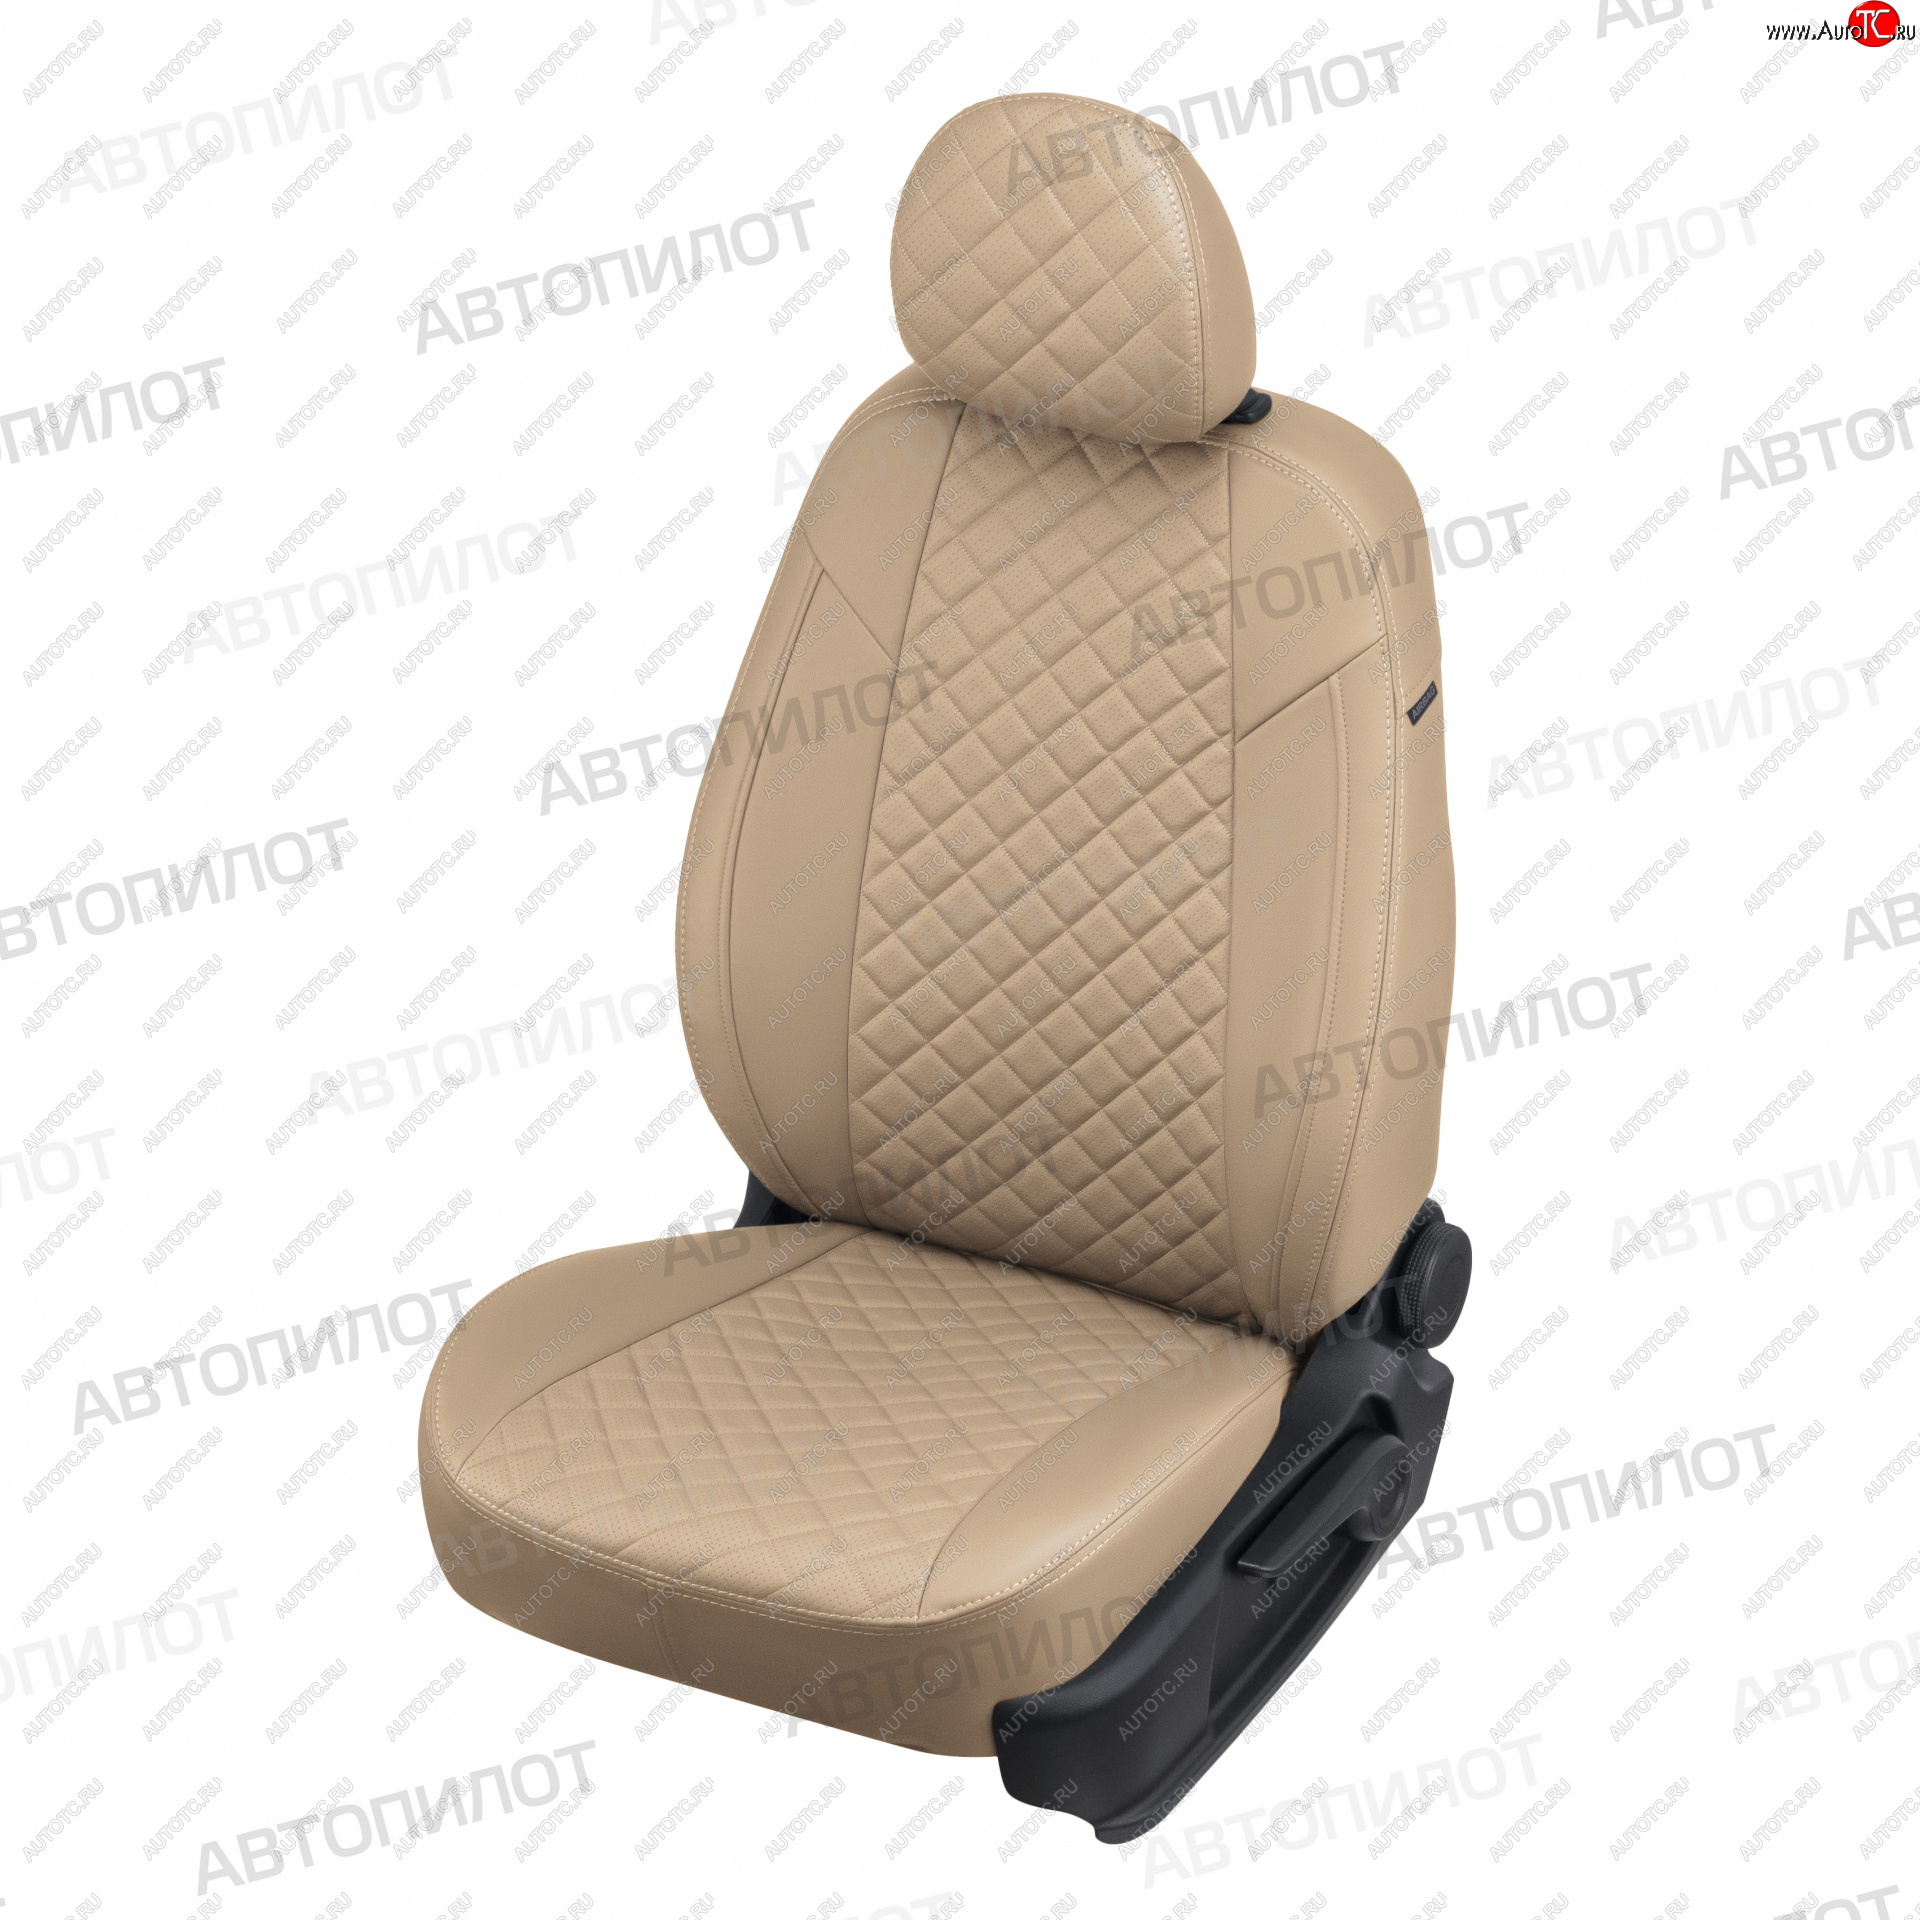 13 999 р. Чехлы сидений (5 мест, экокожа) Автопилот Ромб  Ford Galaxy  2 (2006-2015) (темно-бежевый)